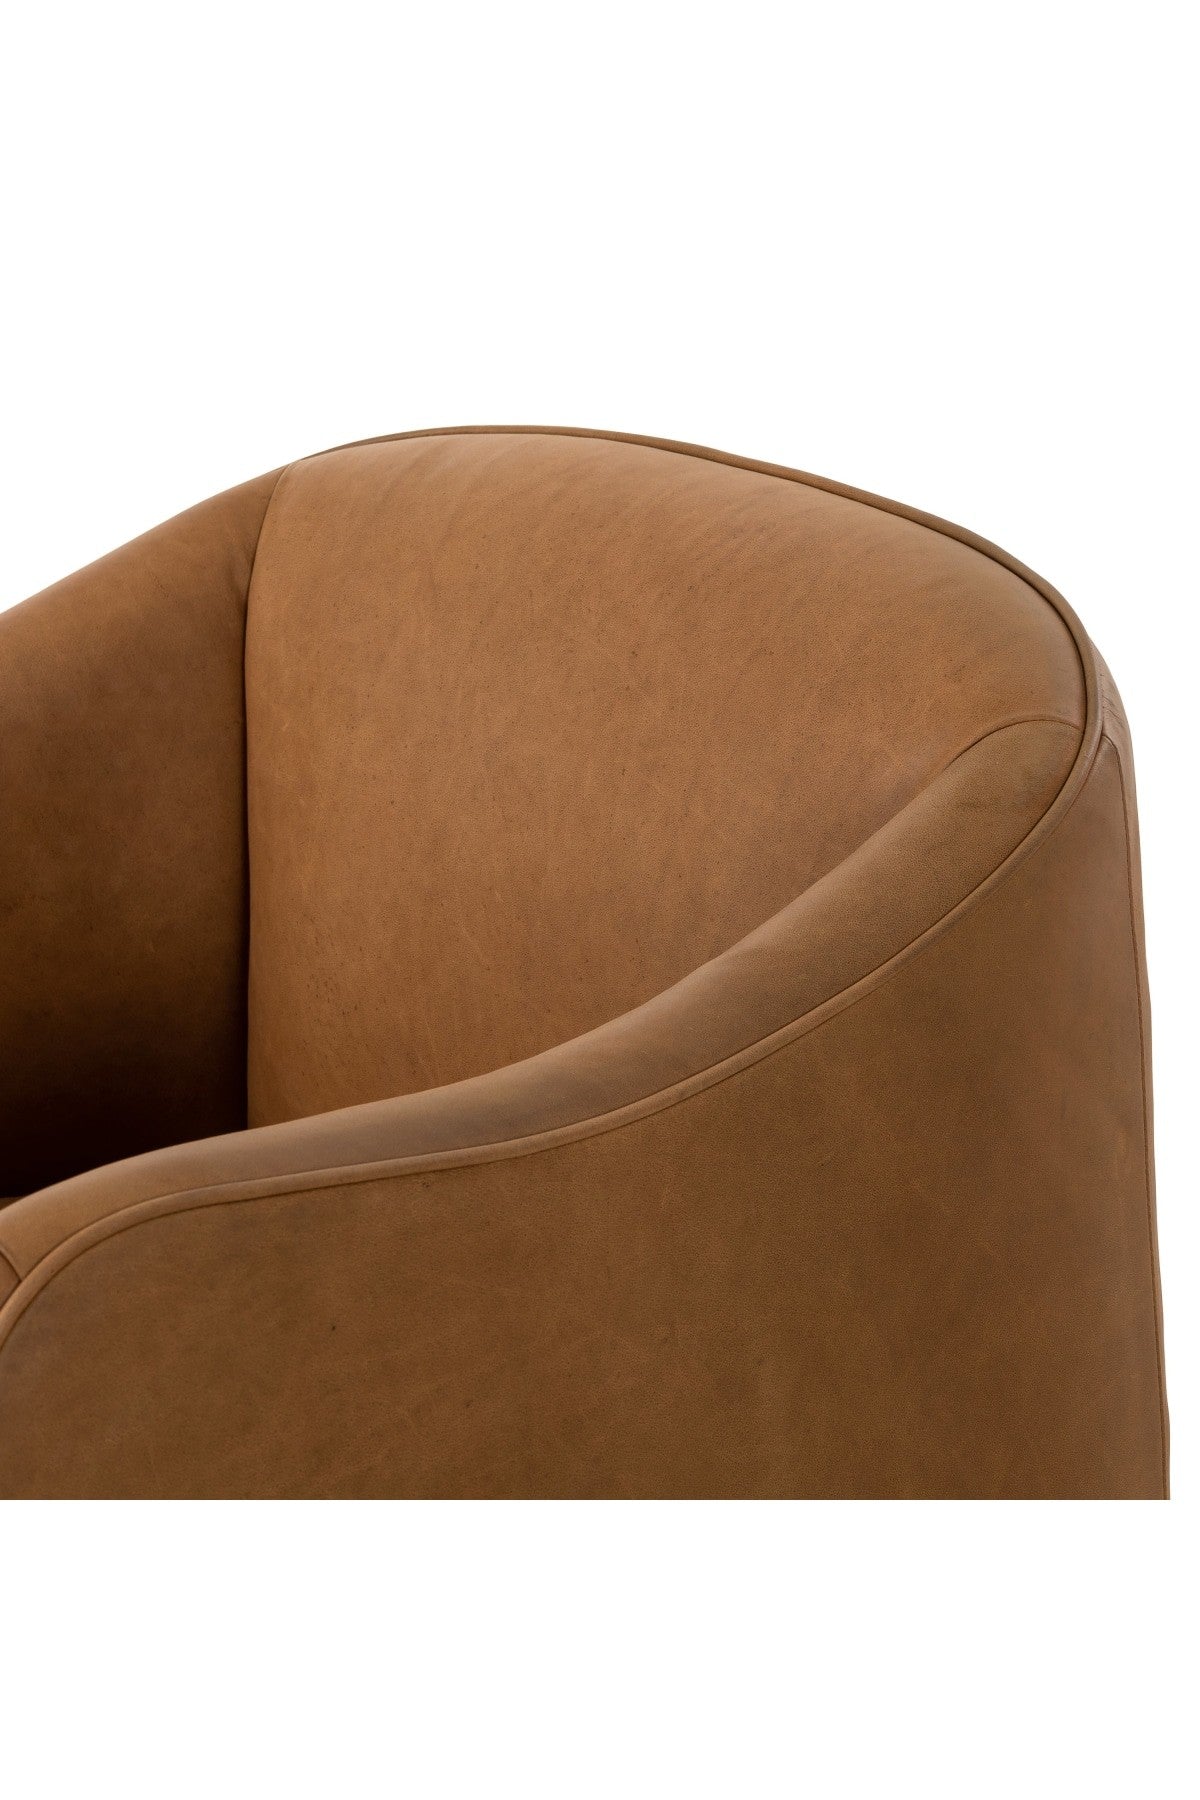 Cardwell Chair - Eucapel Cognac